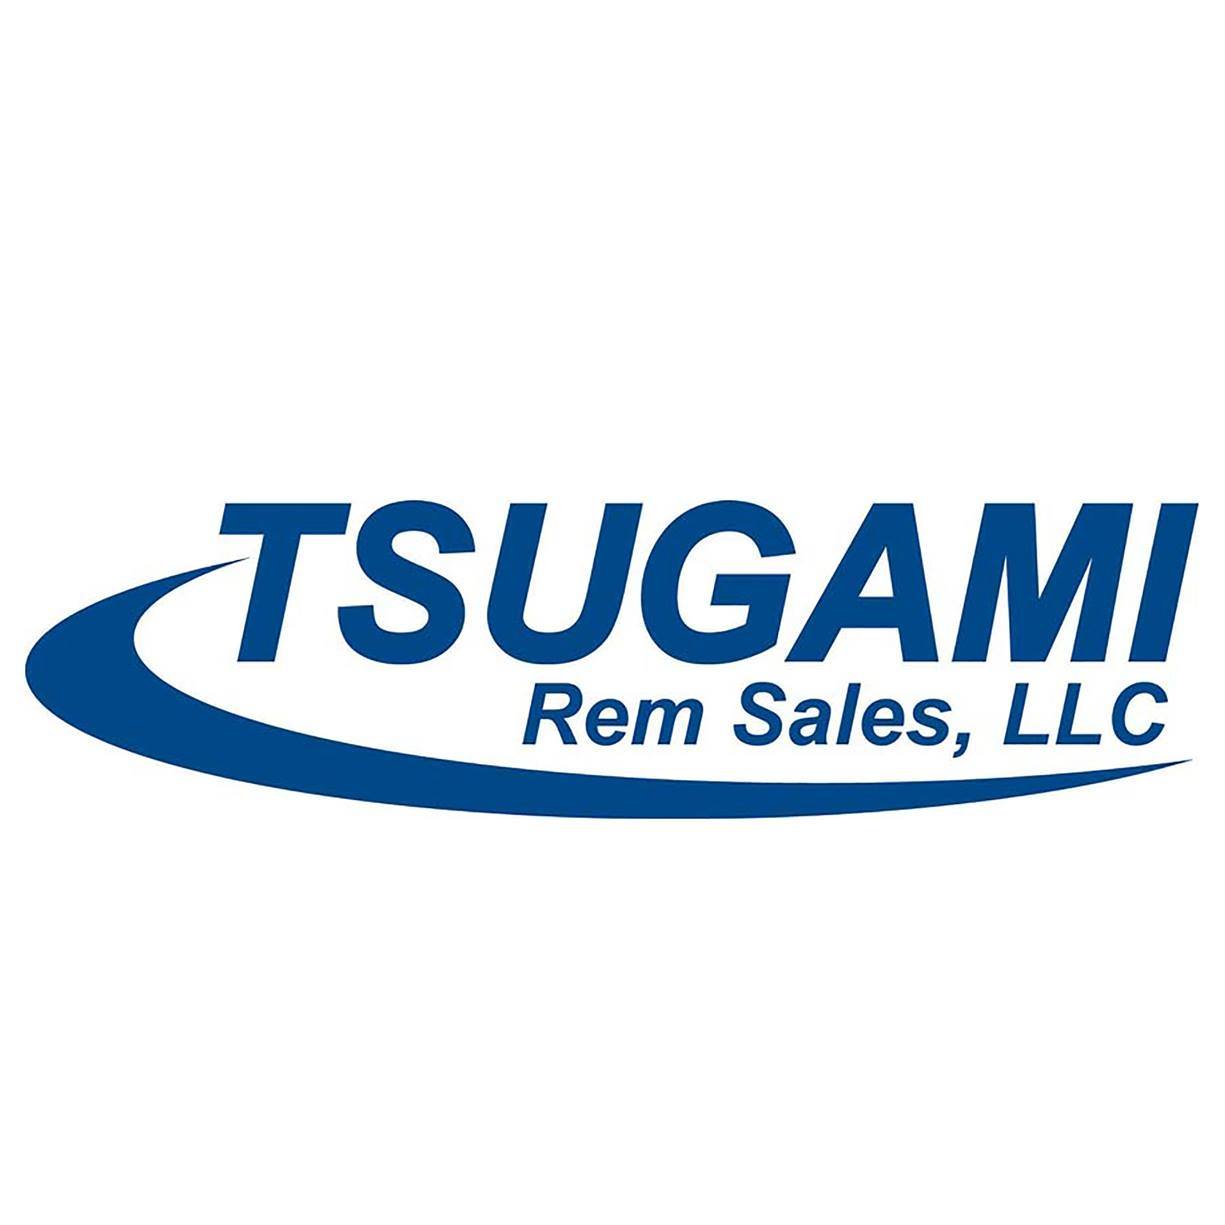 Tsugami_Rem Sales